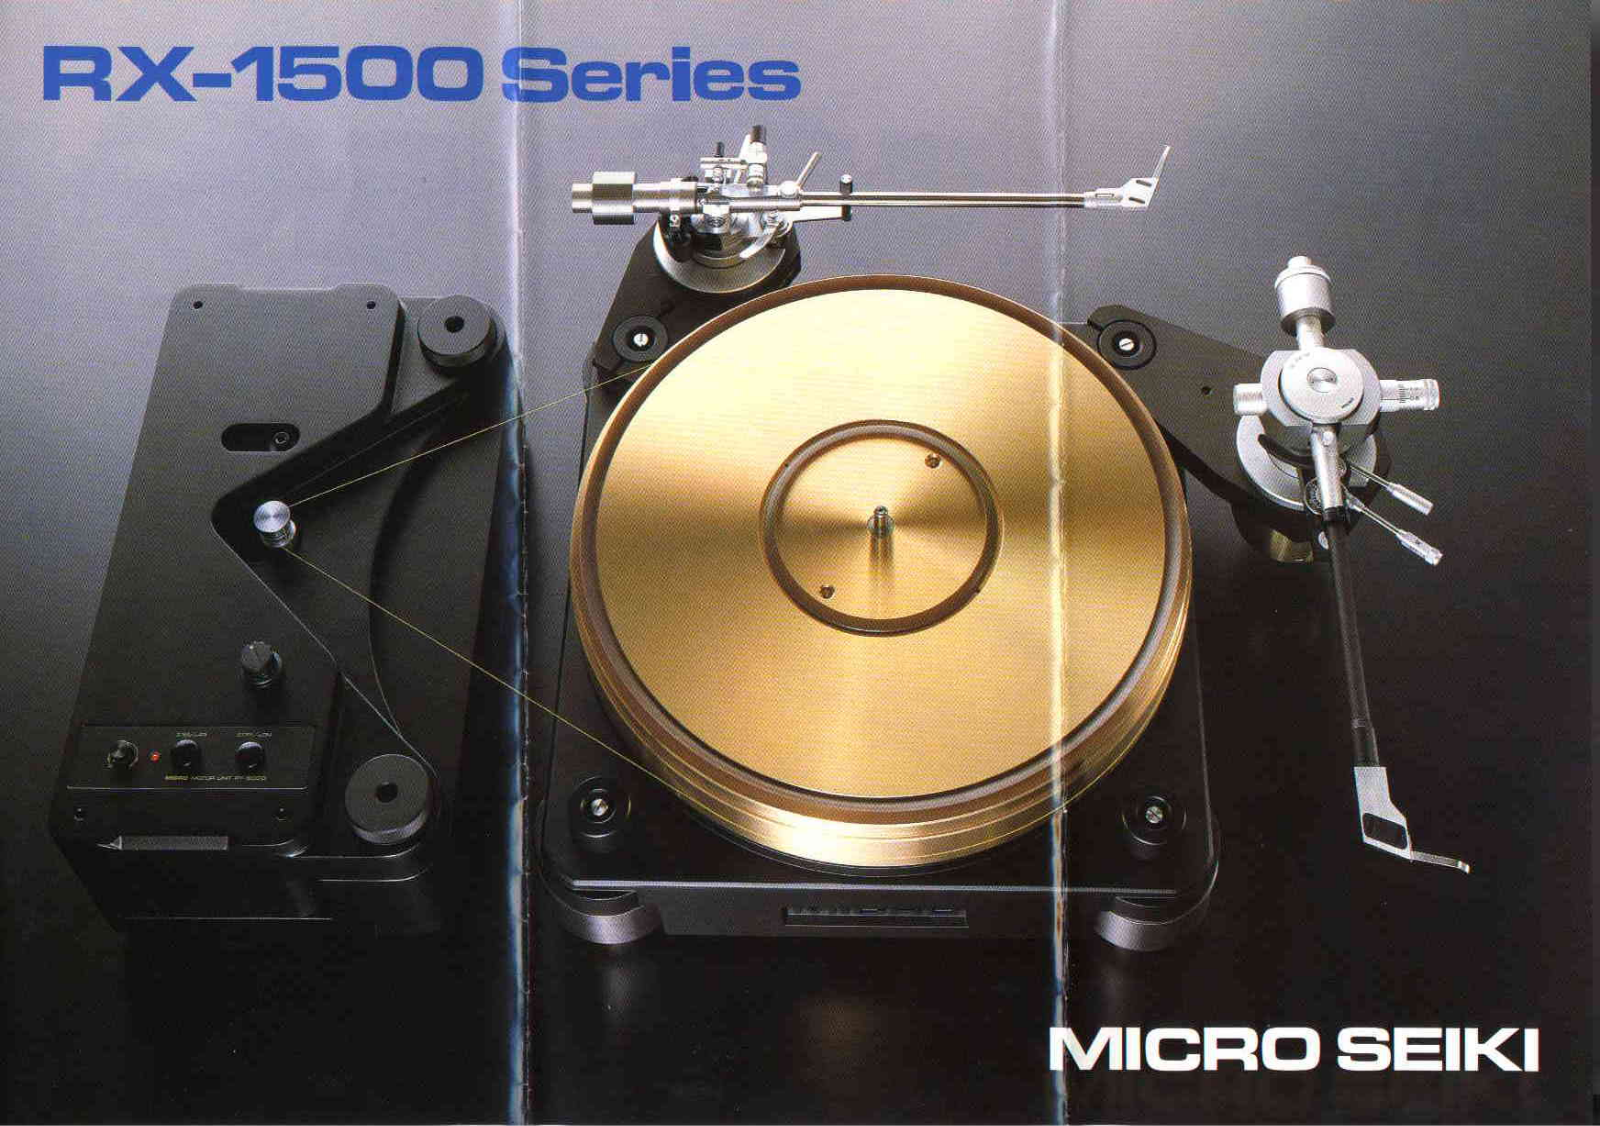 Micro Seiki RX-1500 Brochure